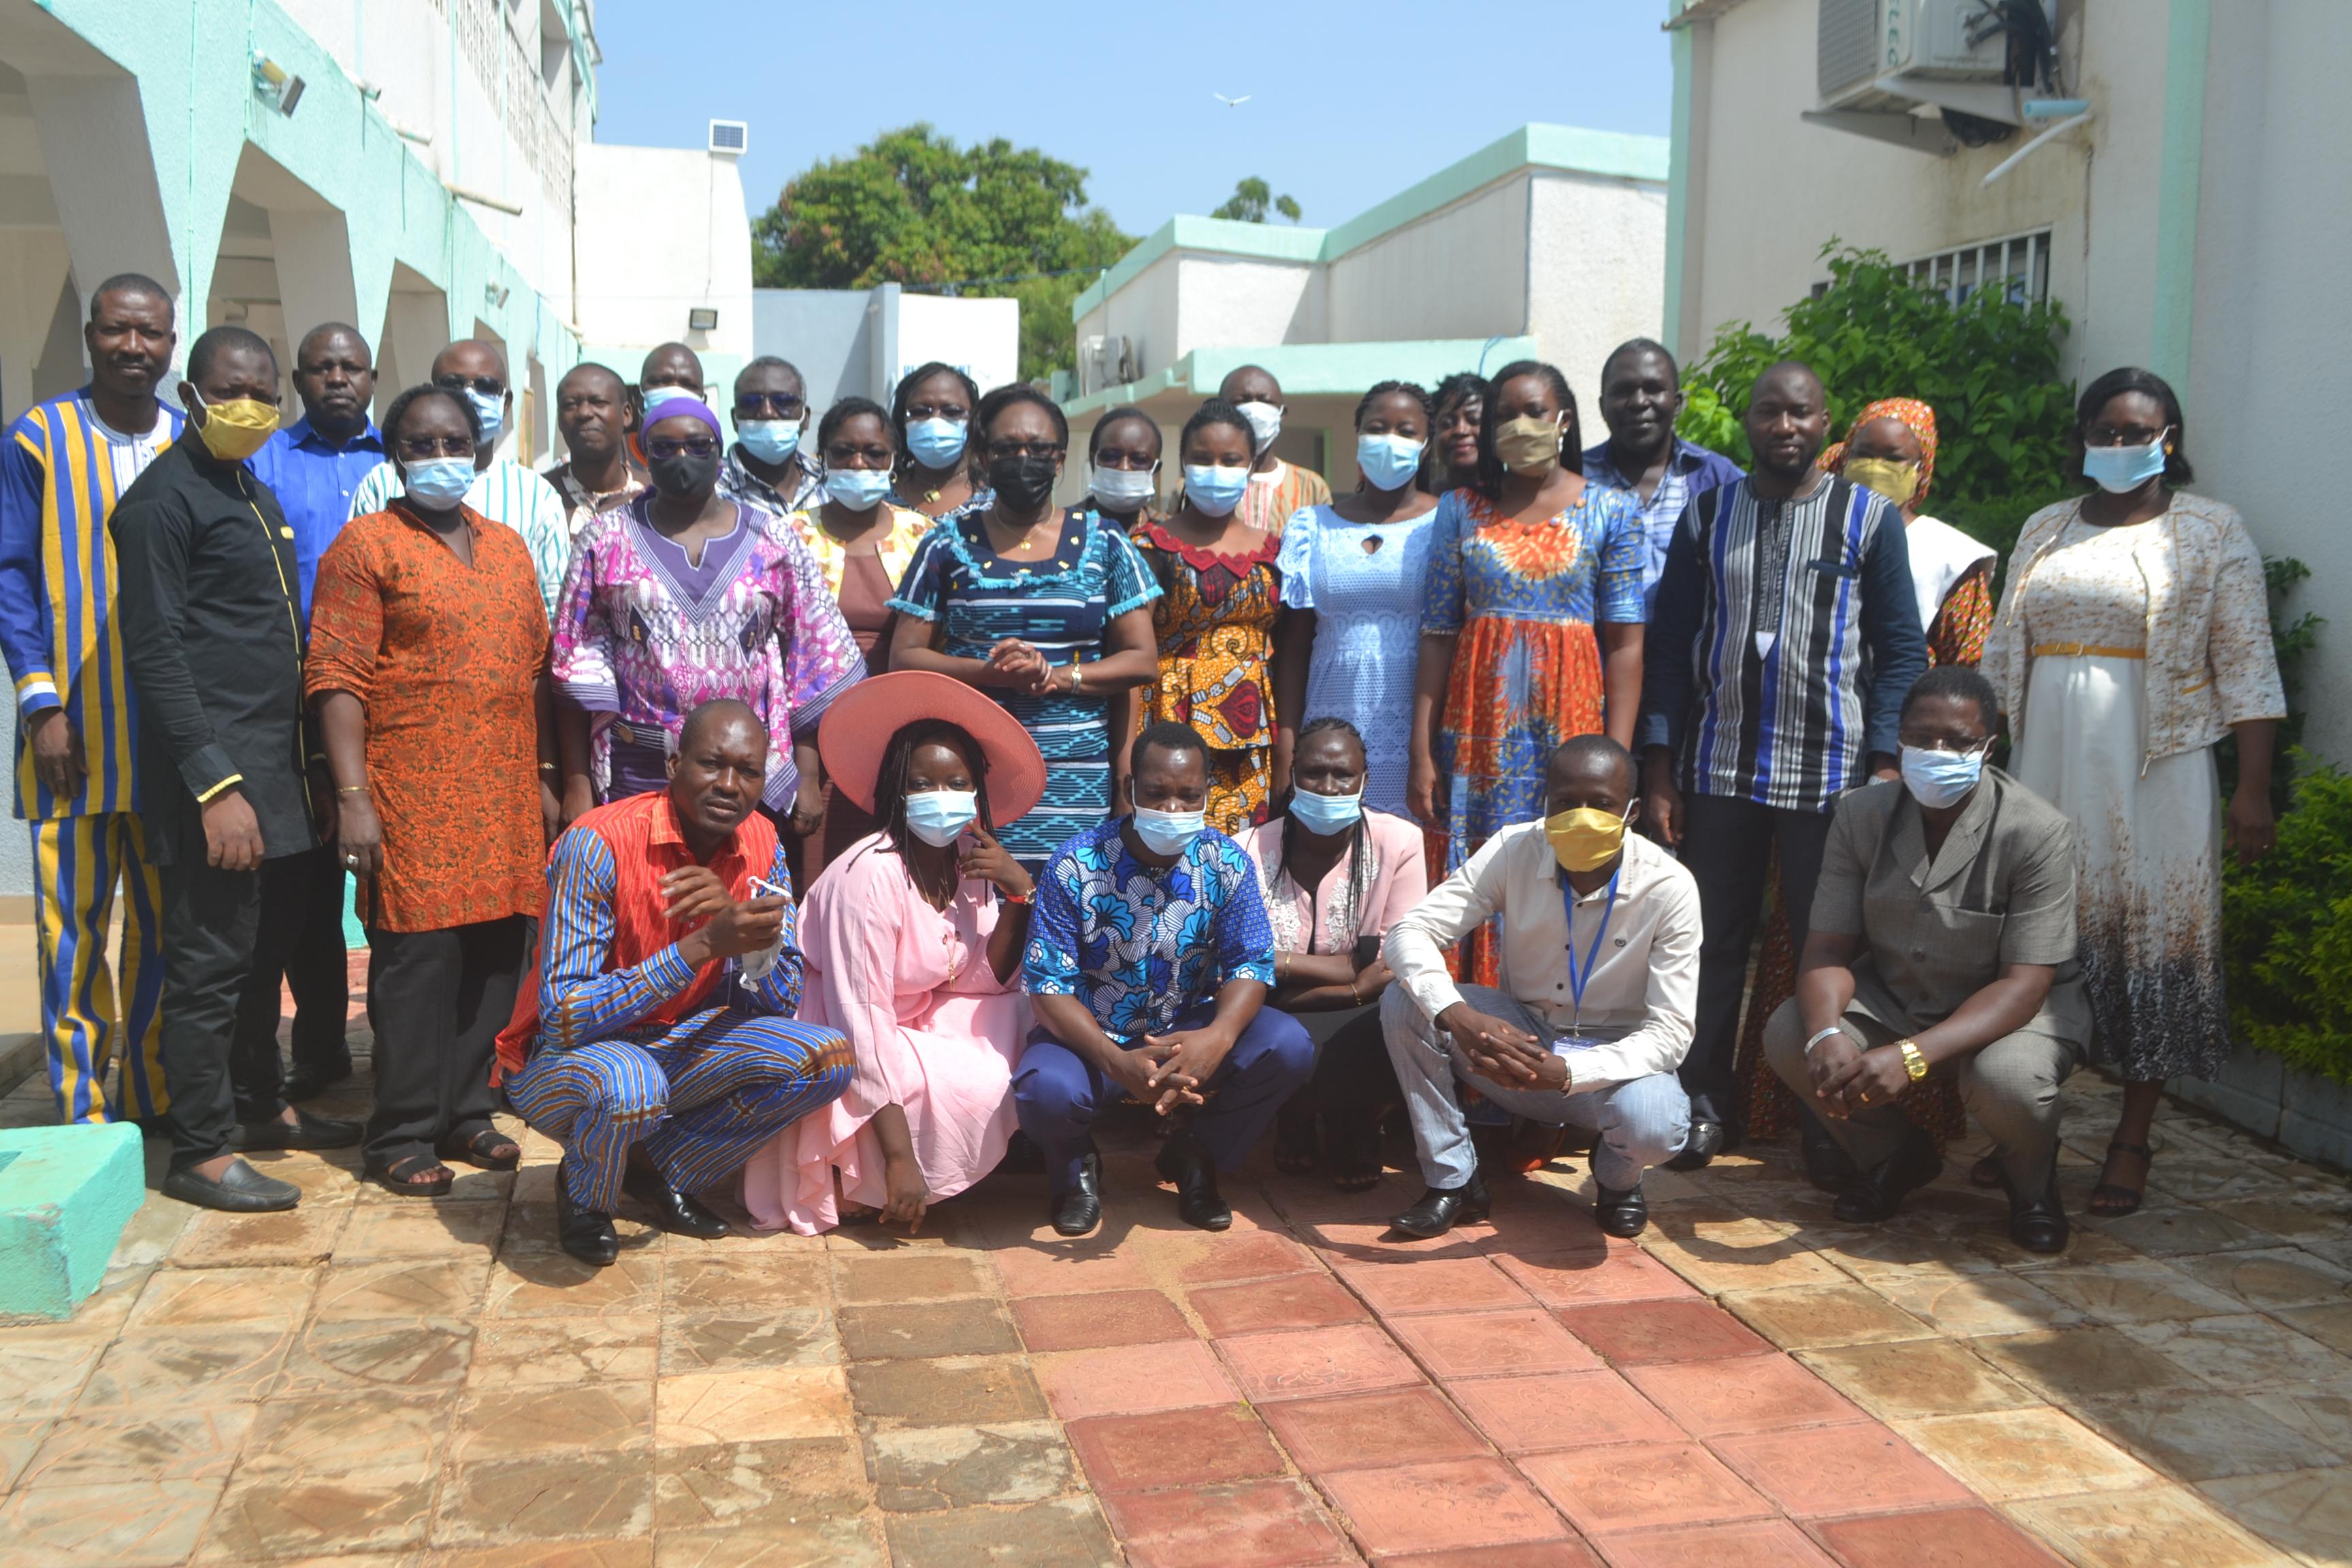 Burkina Faso family planning meeting participants